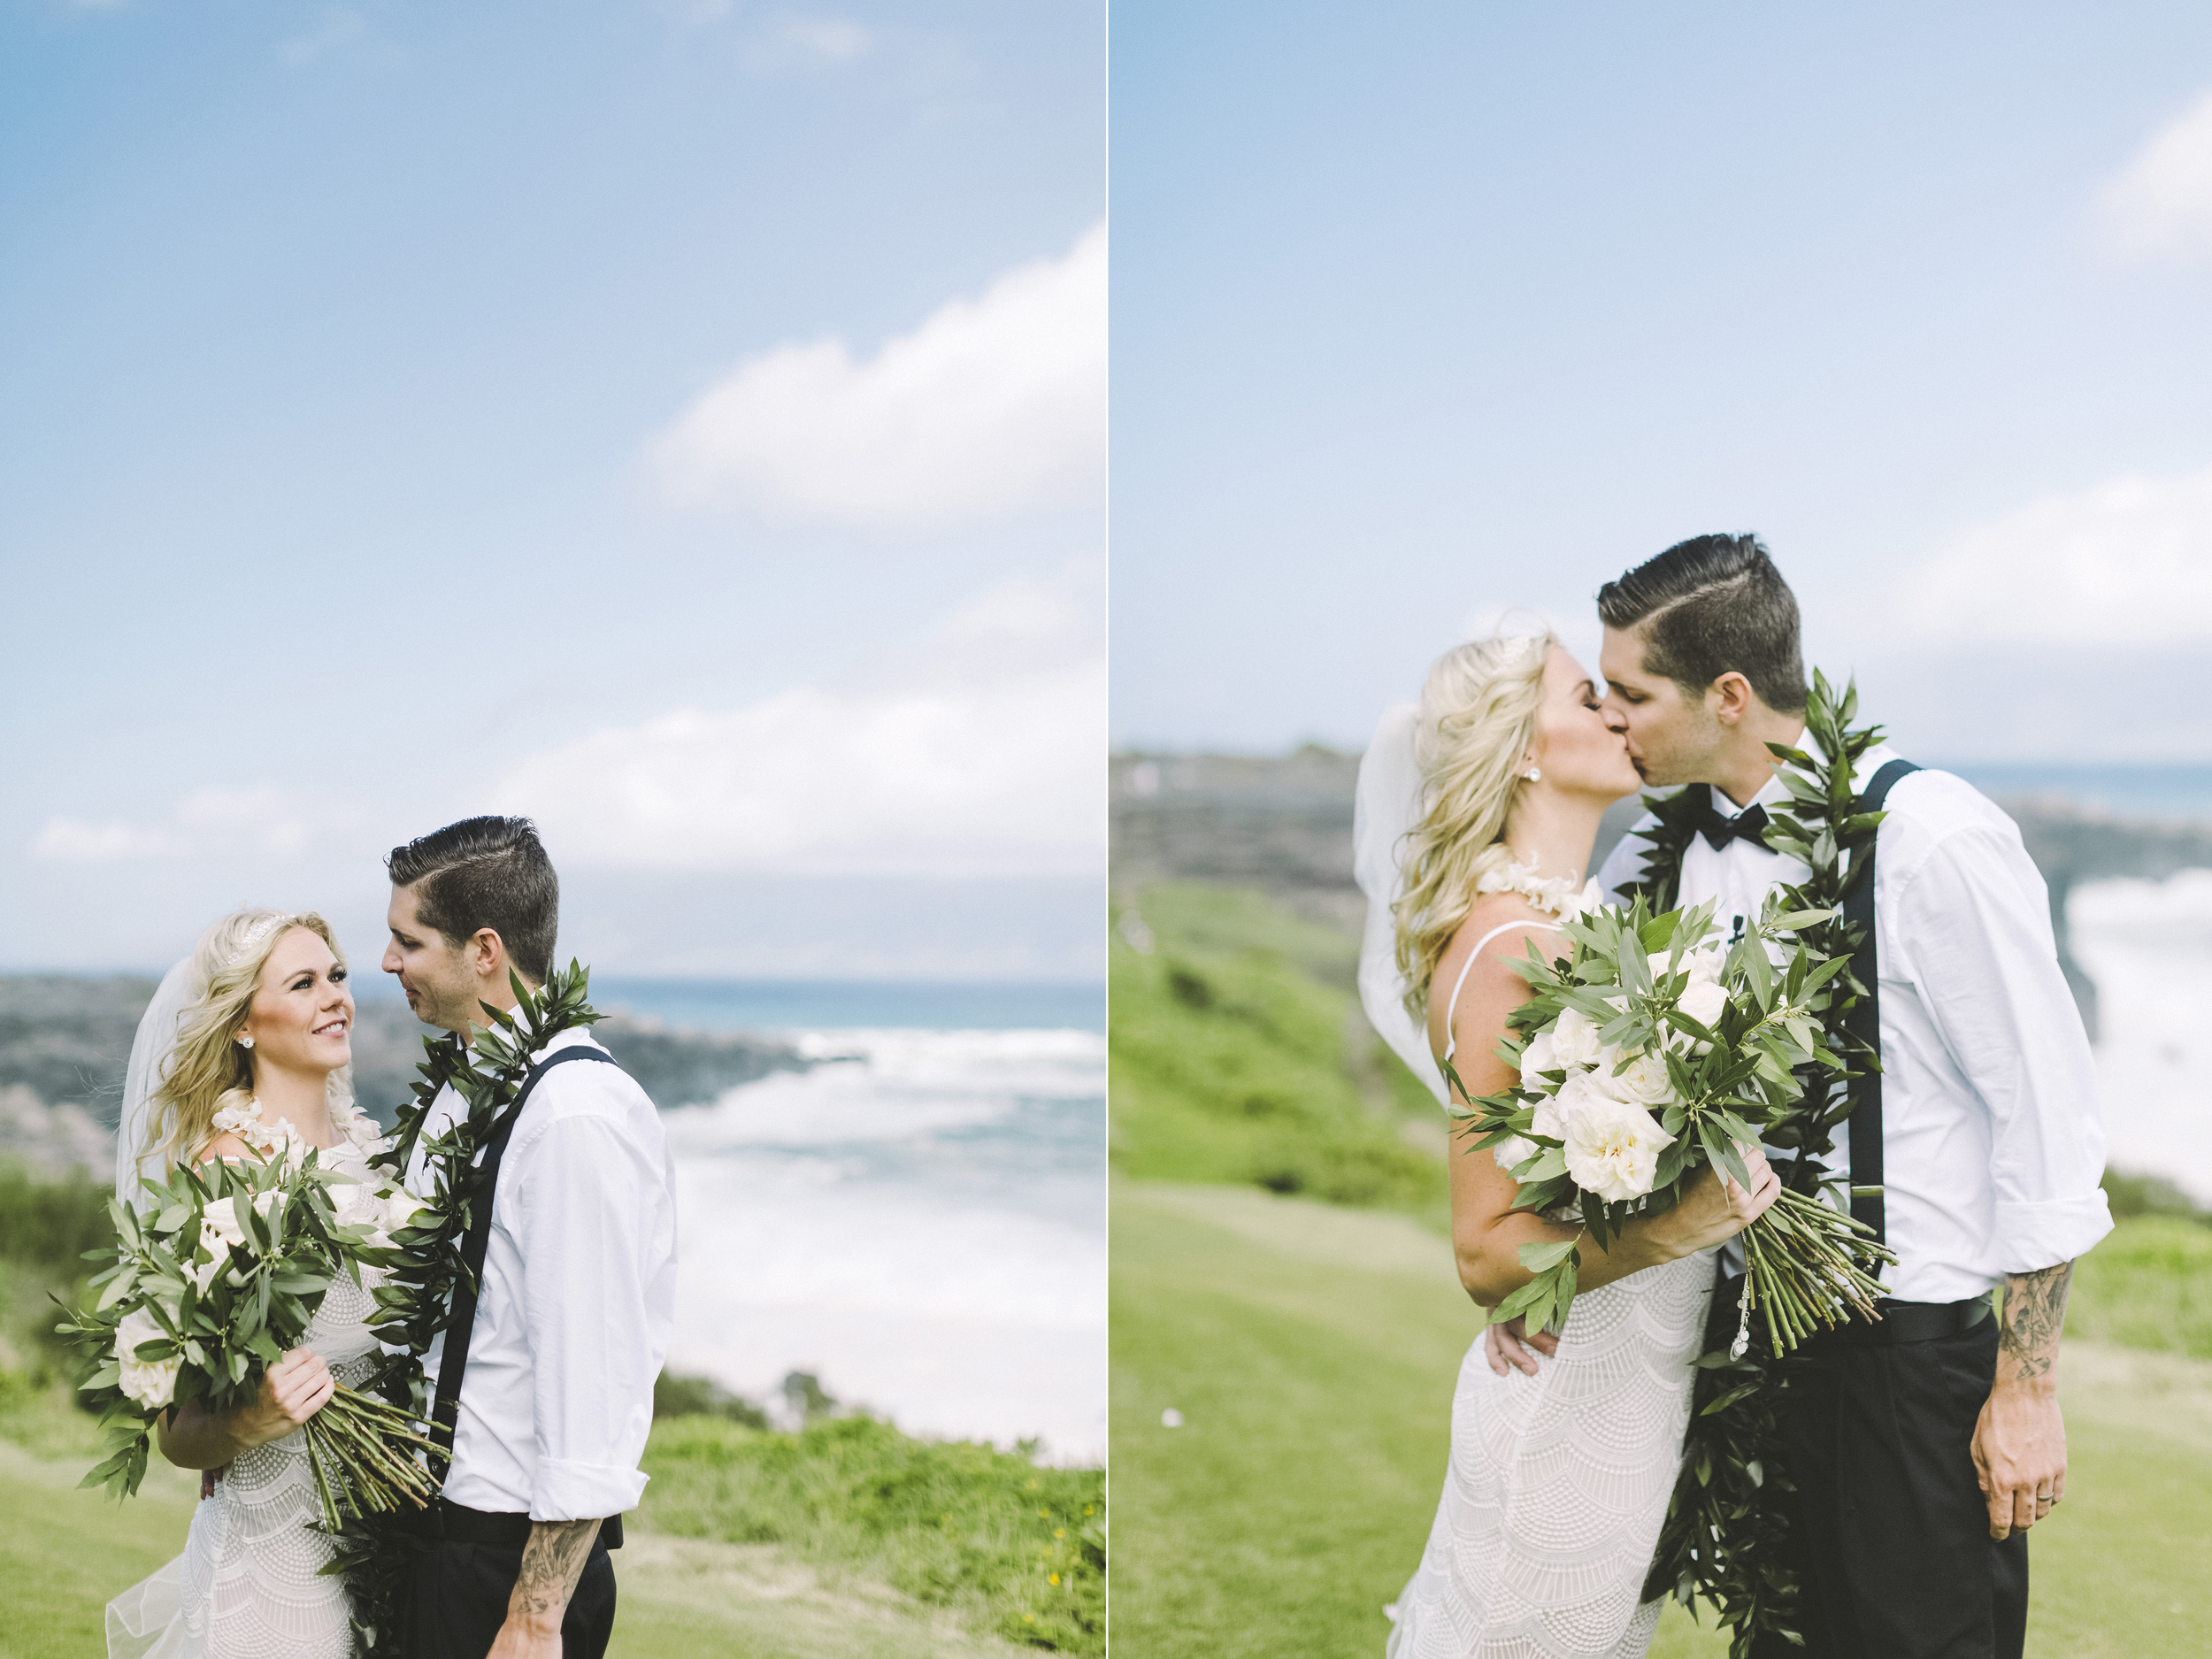 angie-diaz-photography-hawaii-wedding-37.jpg